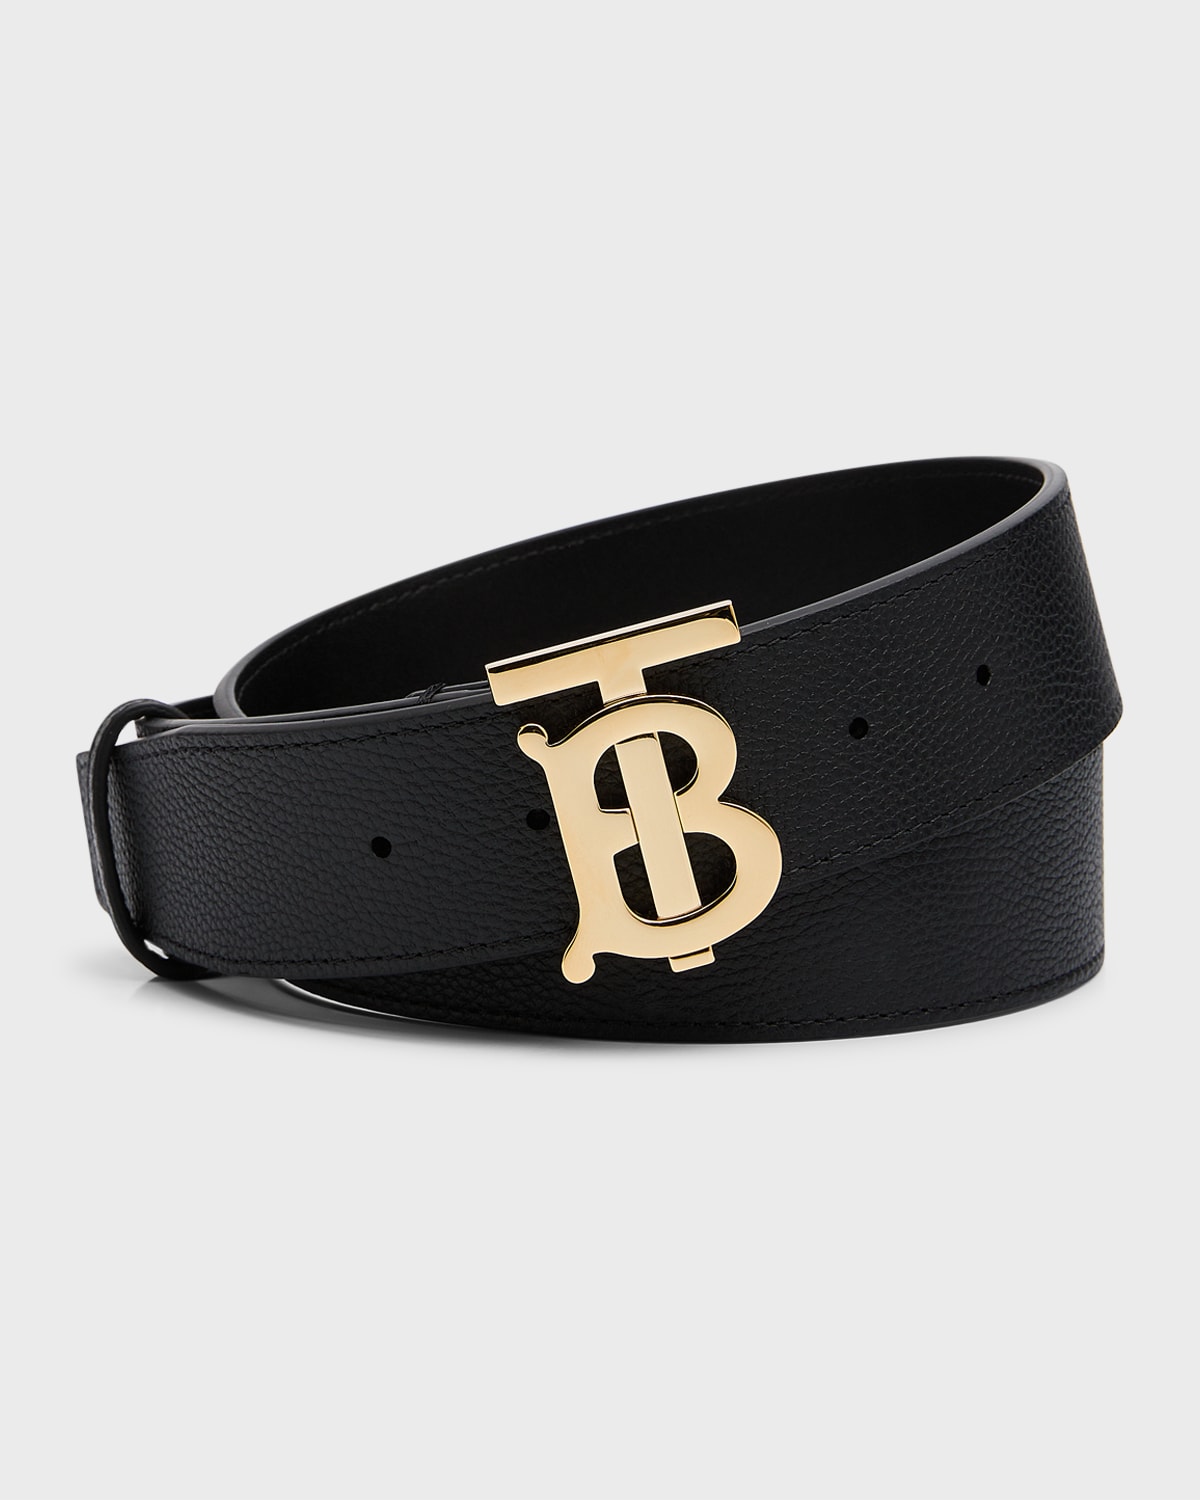 Burberry Reversible Monogram Leather Belt - 100